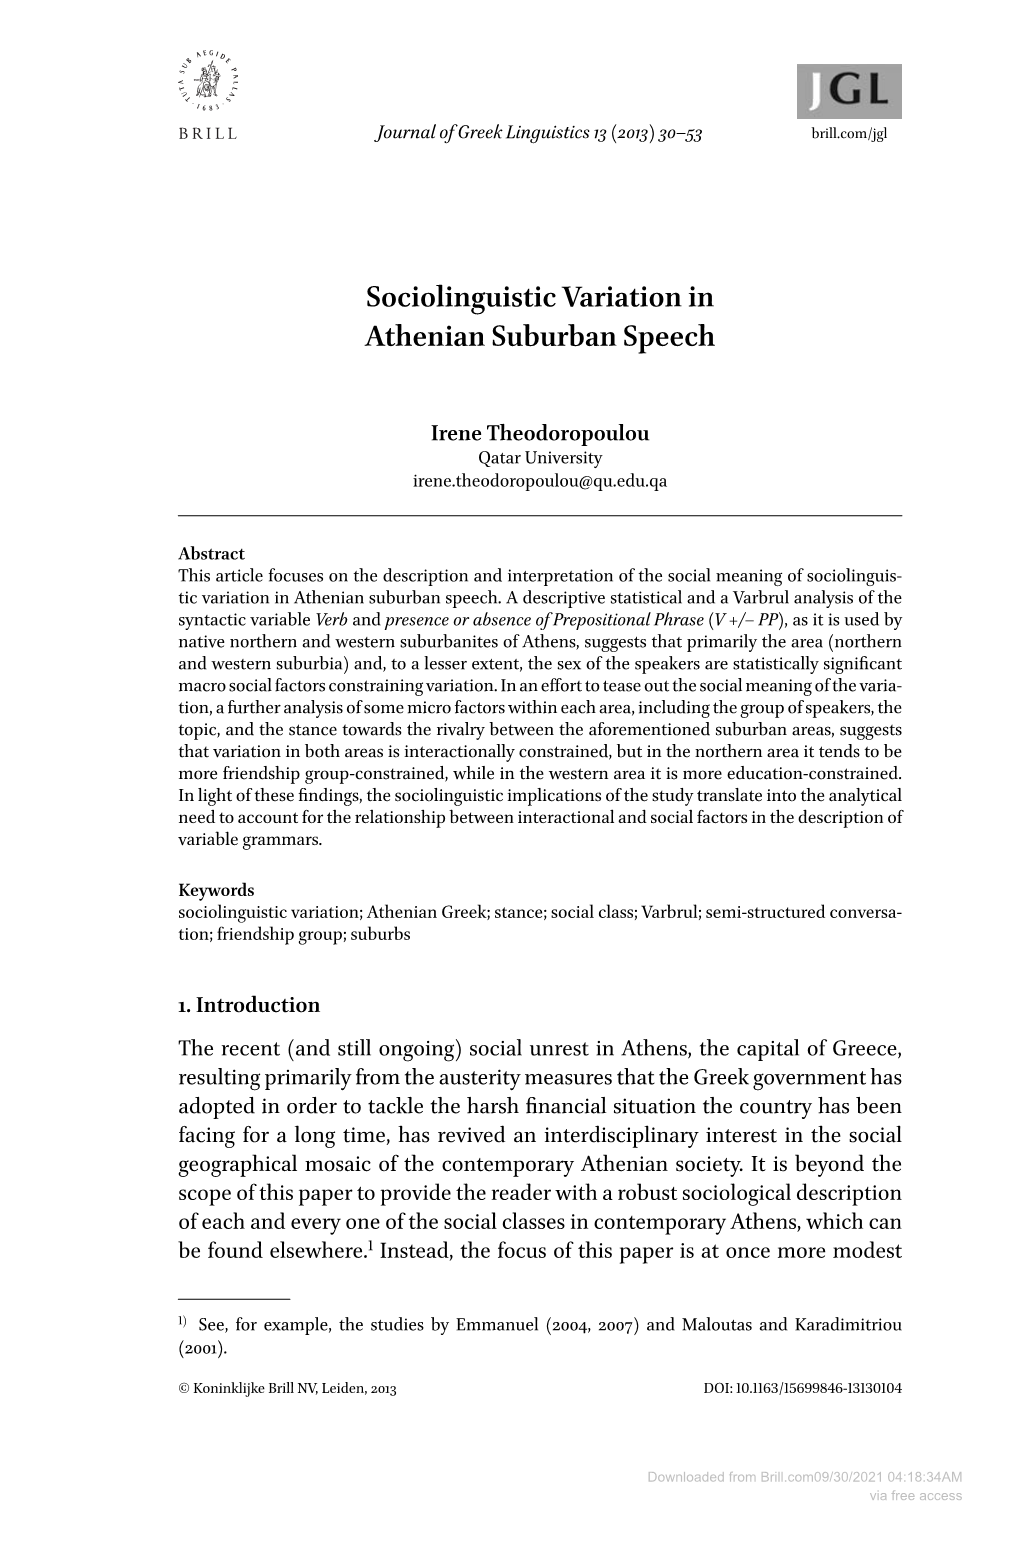 Sociolinguistic Variation in Athenian Suburban Speech